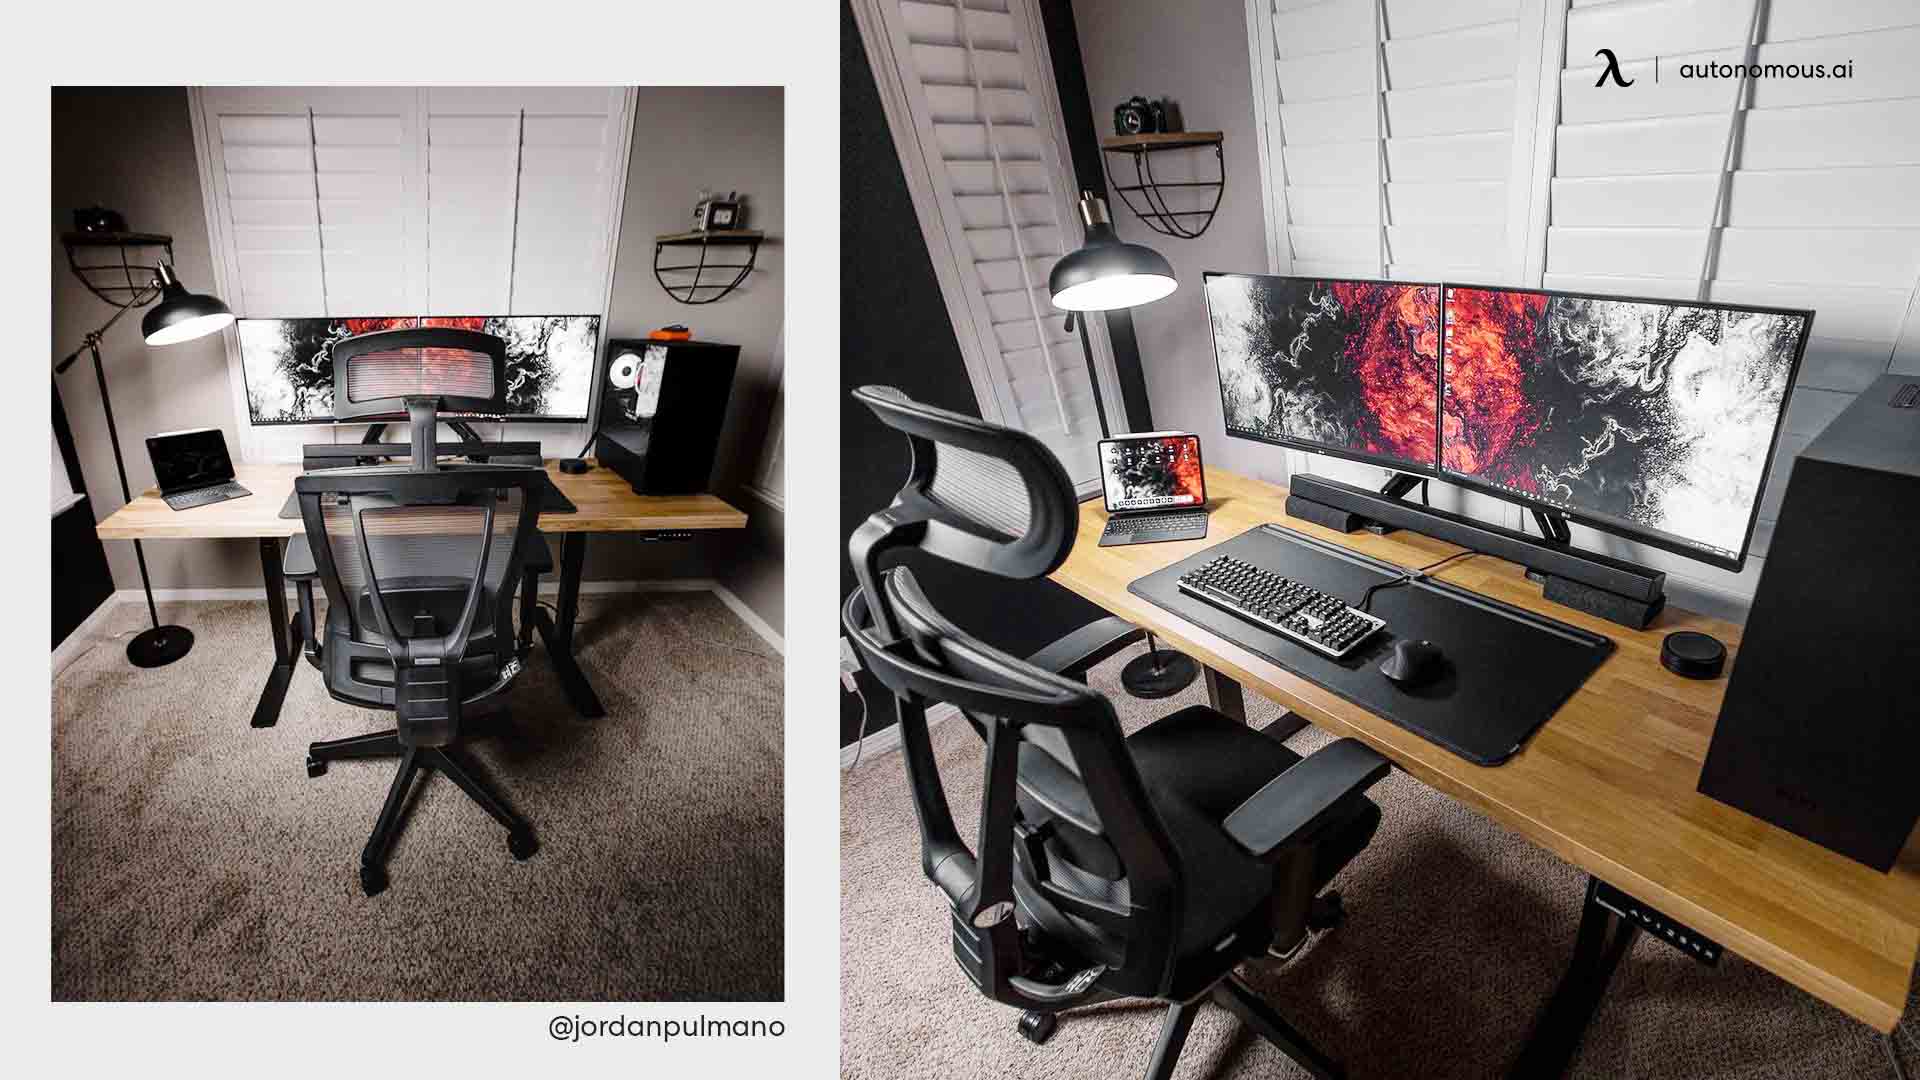 The Professional All-Black Desk Setup